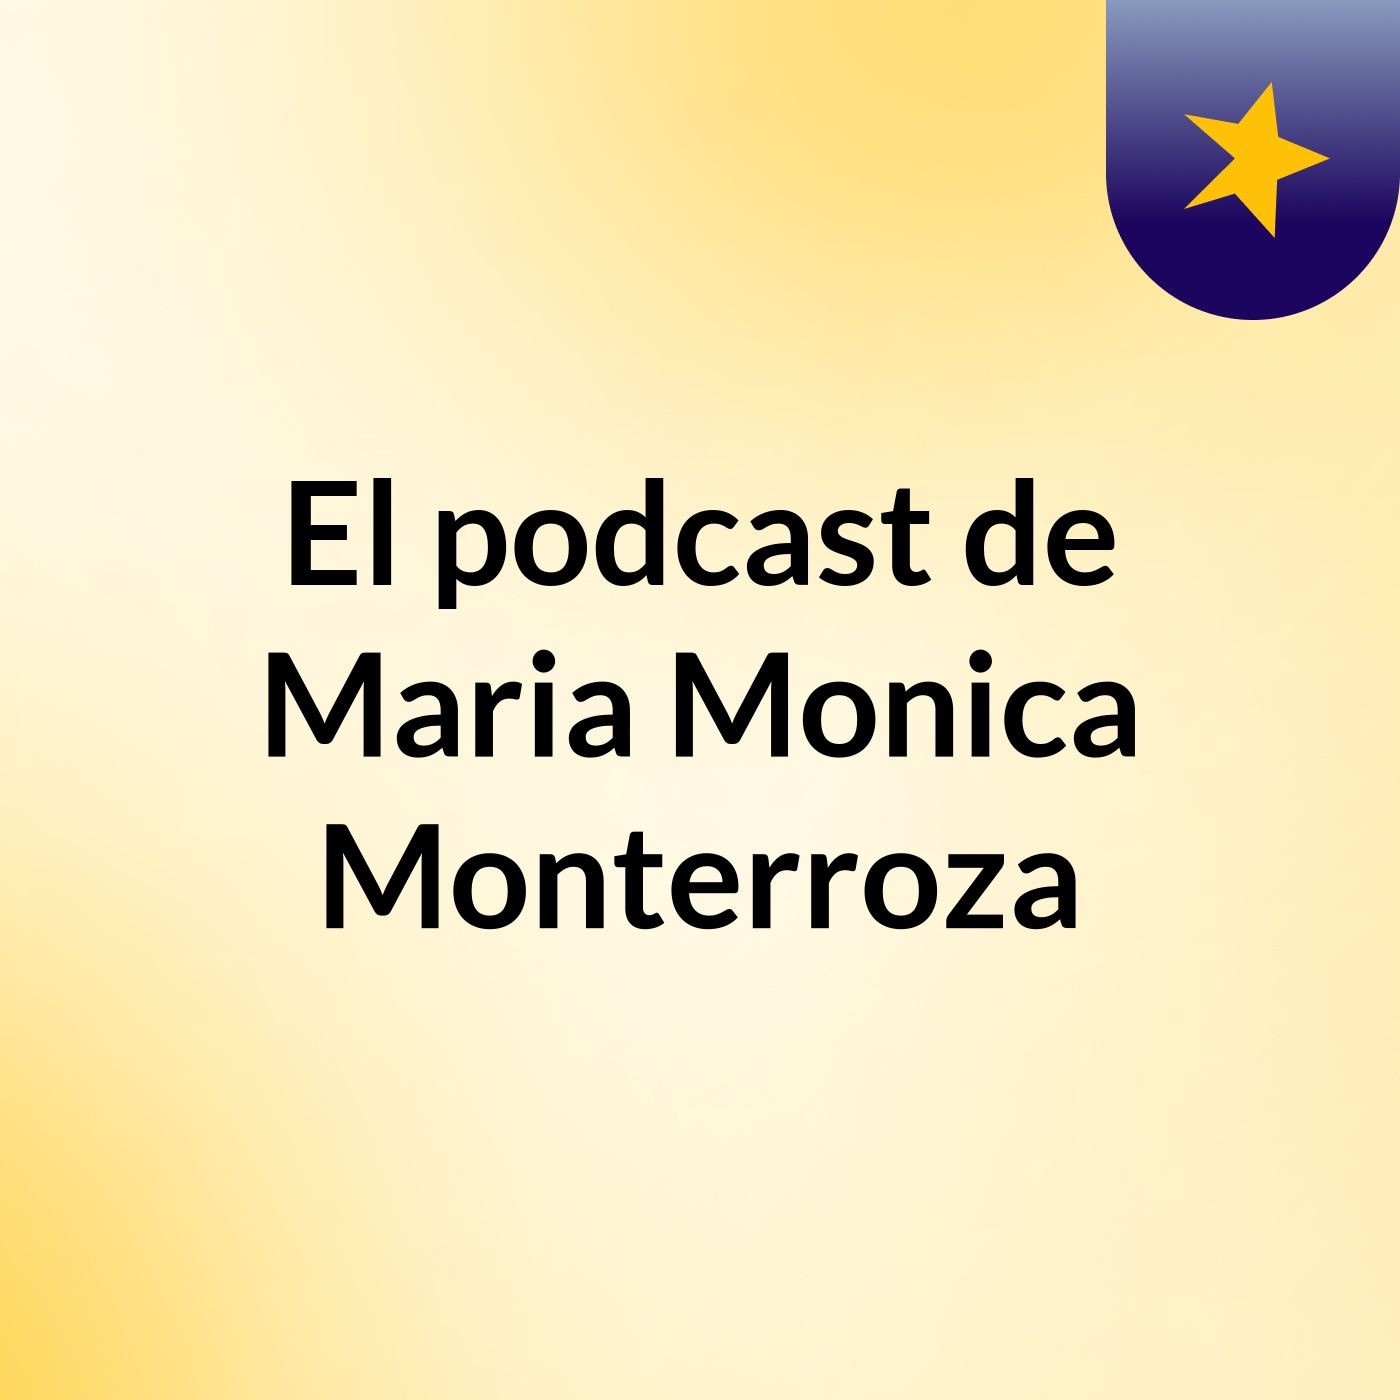 El podcast de Maria Monica Monterroza